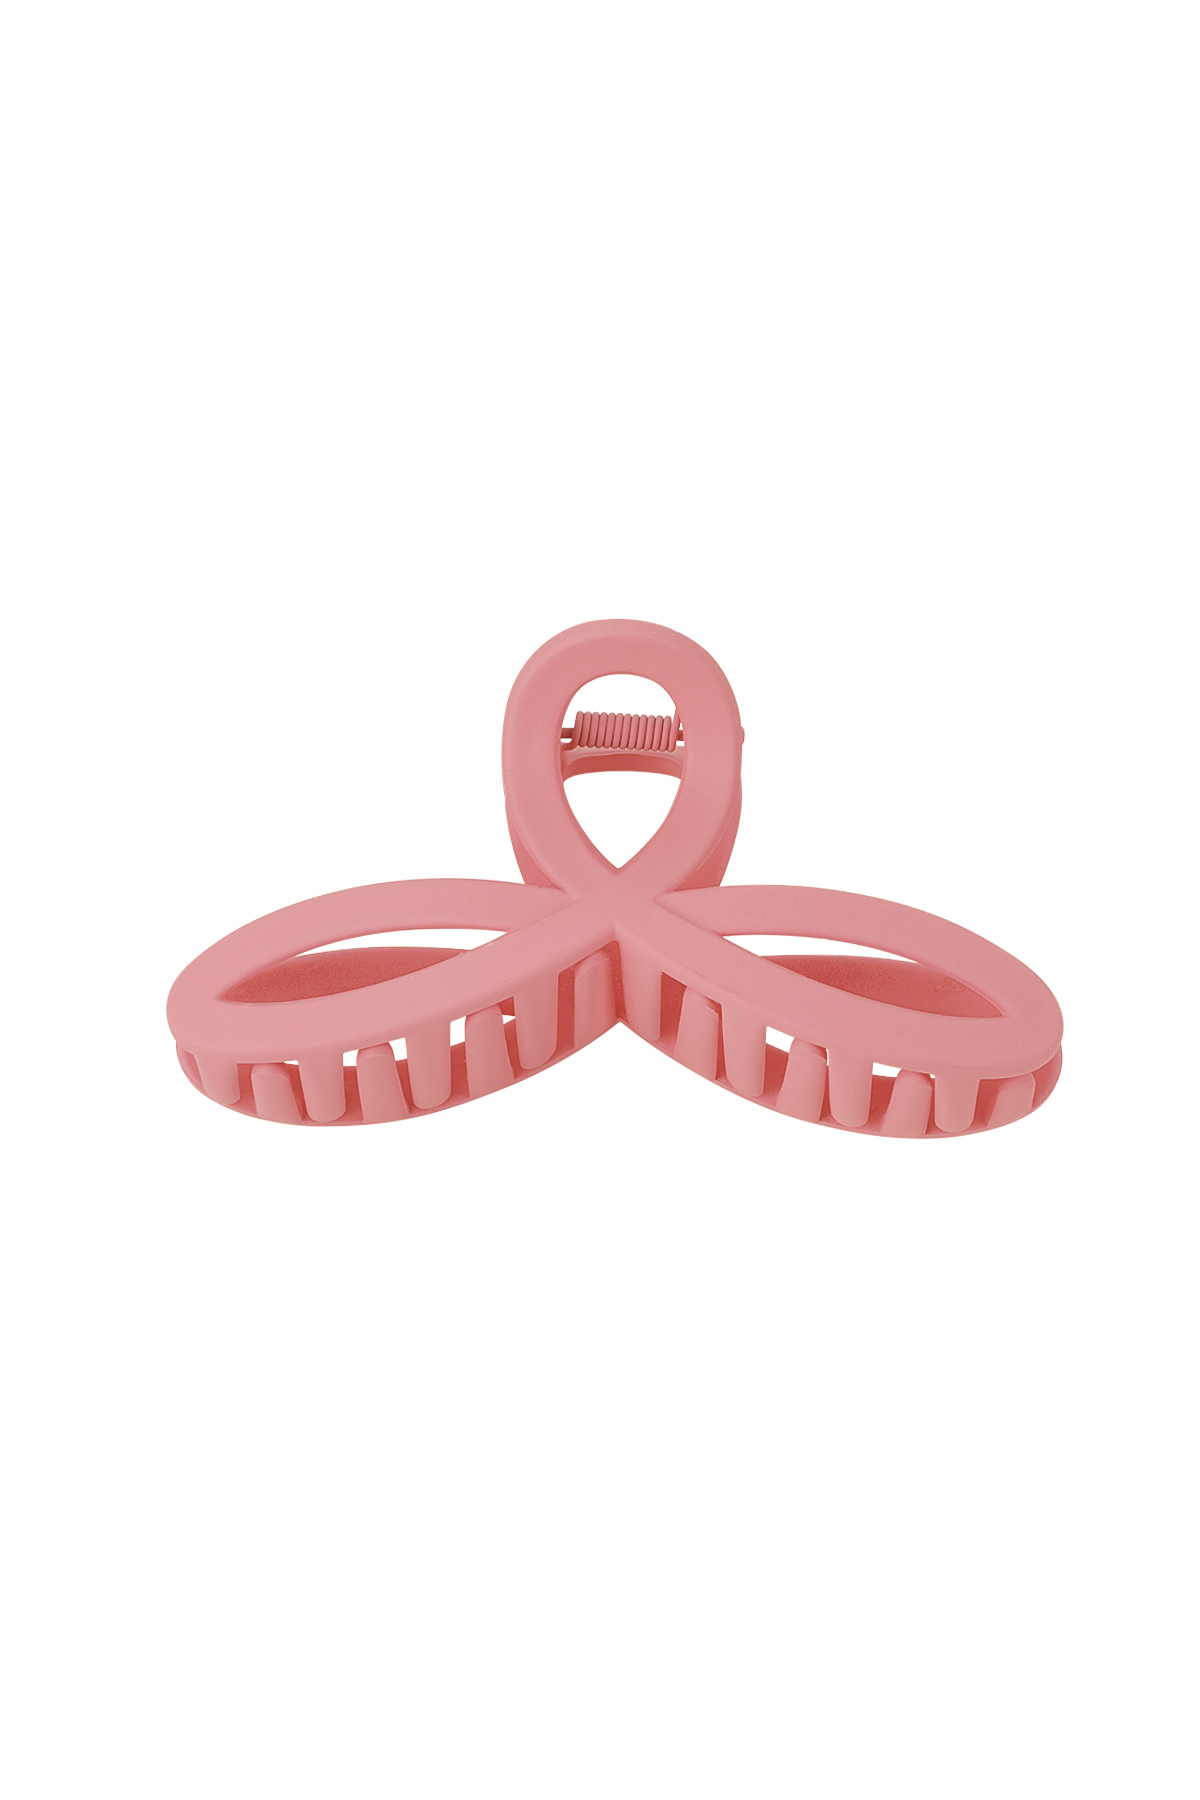 Hair clip cheerful - pink Plastic h5 